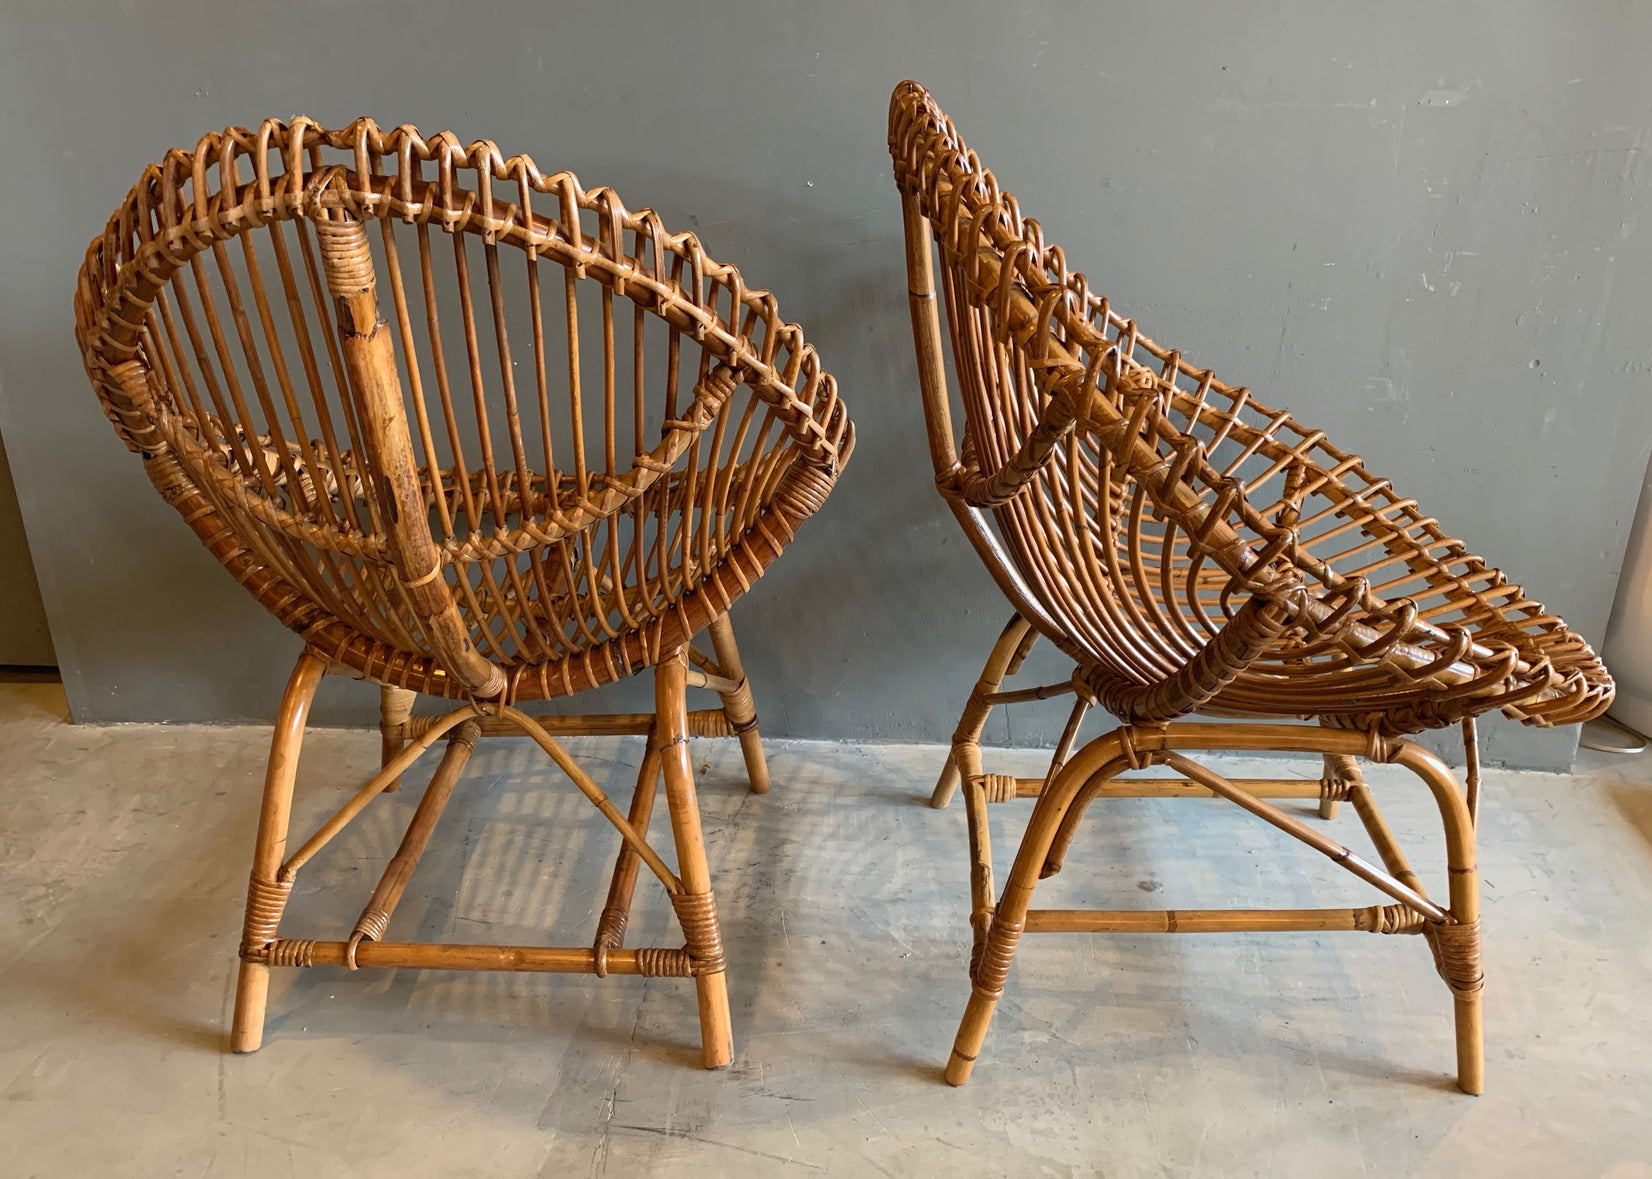 Bonacina Sculptural Chairs, 1950s Italy